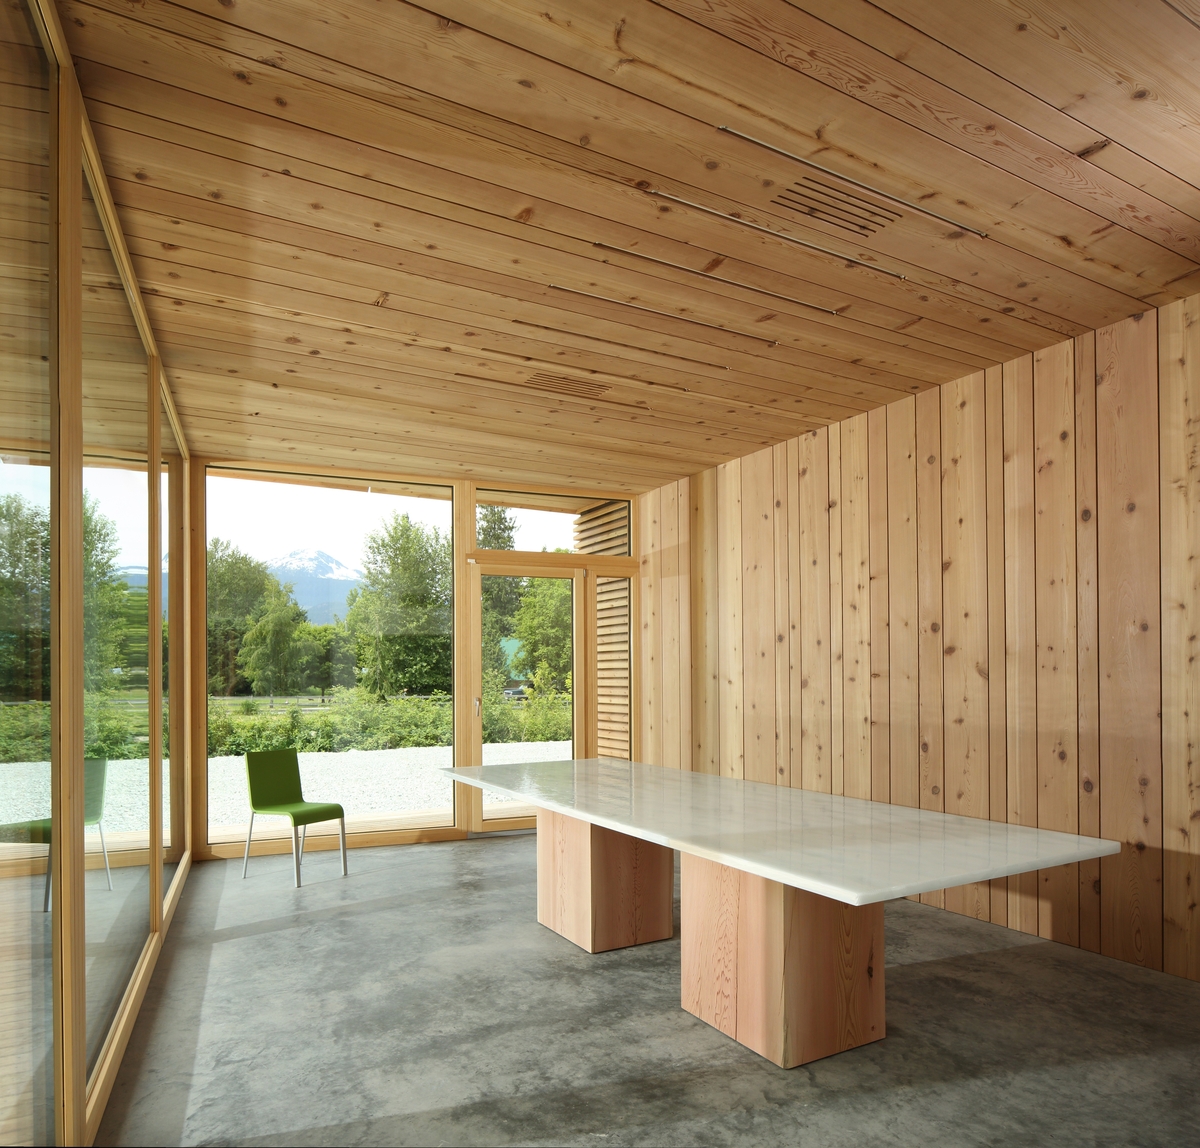 BC被动式房屋工厂会议室的室内下午视图，显示木质墙板和木质天花板镶板，向外延伸的大型玻璃